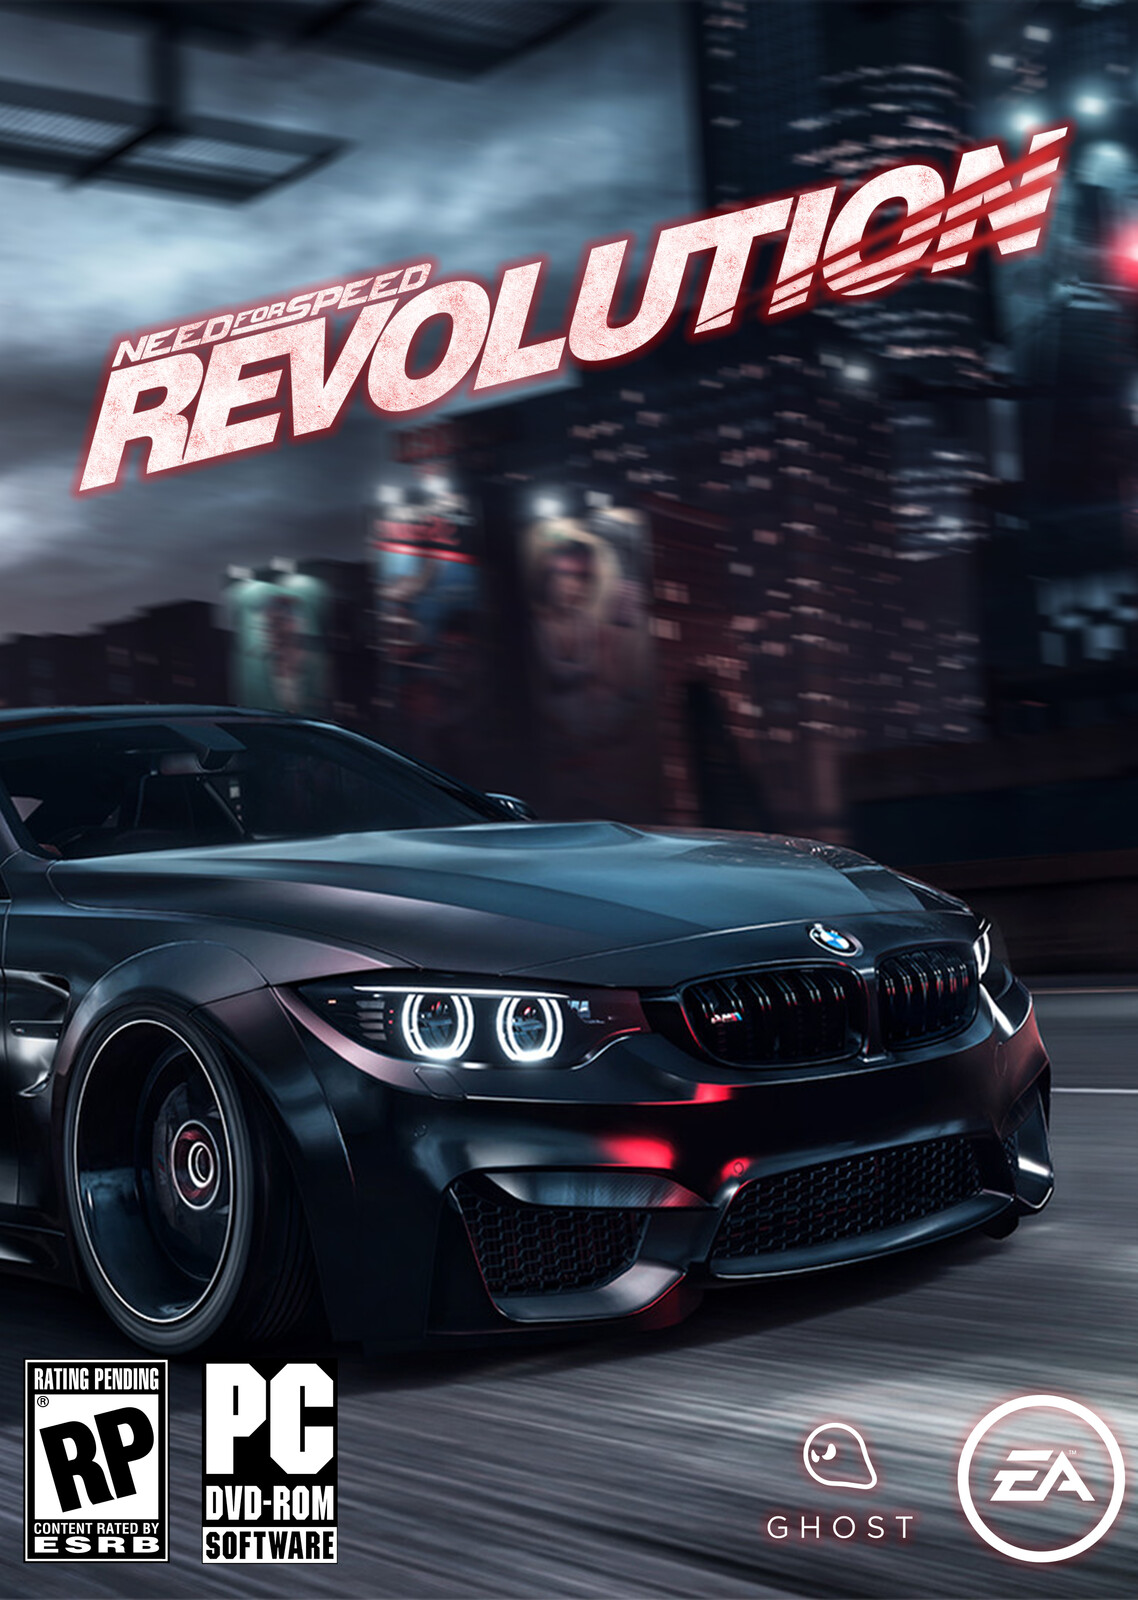 Need for Speed Revolution (Original Idea - image by Mikhail Sharov).